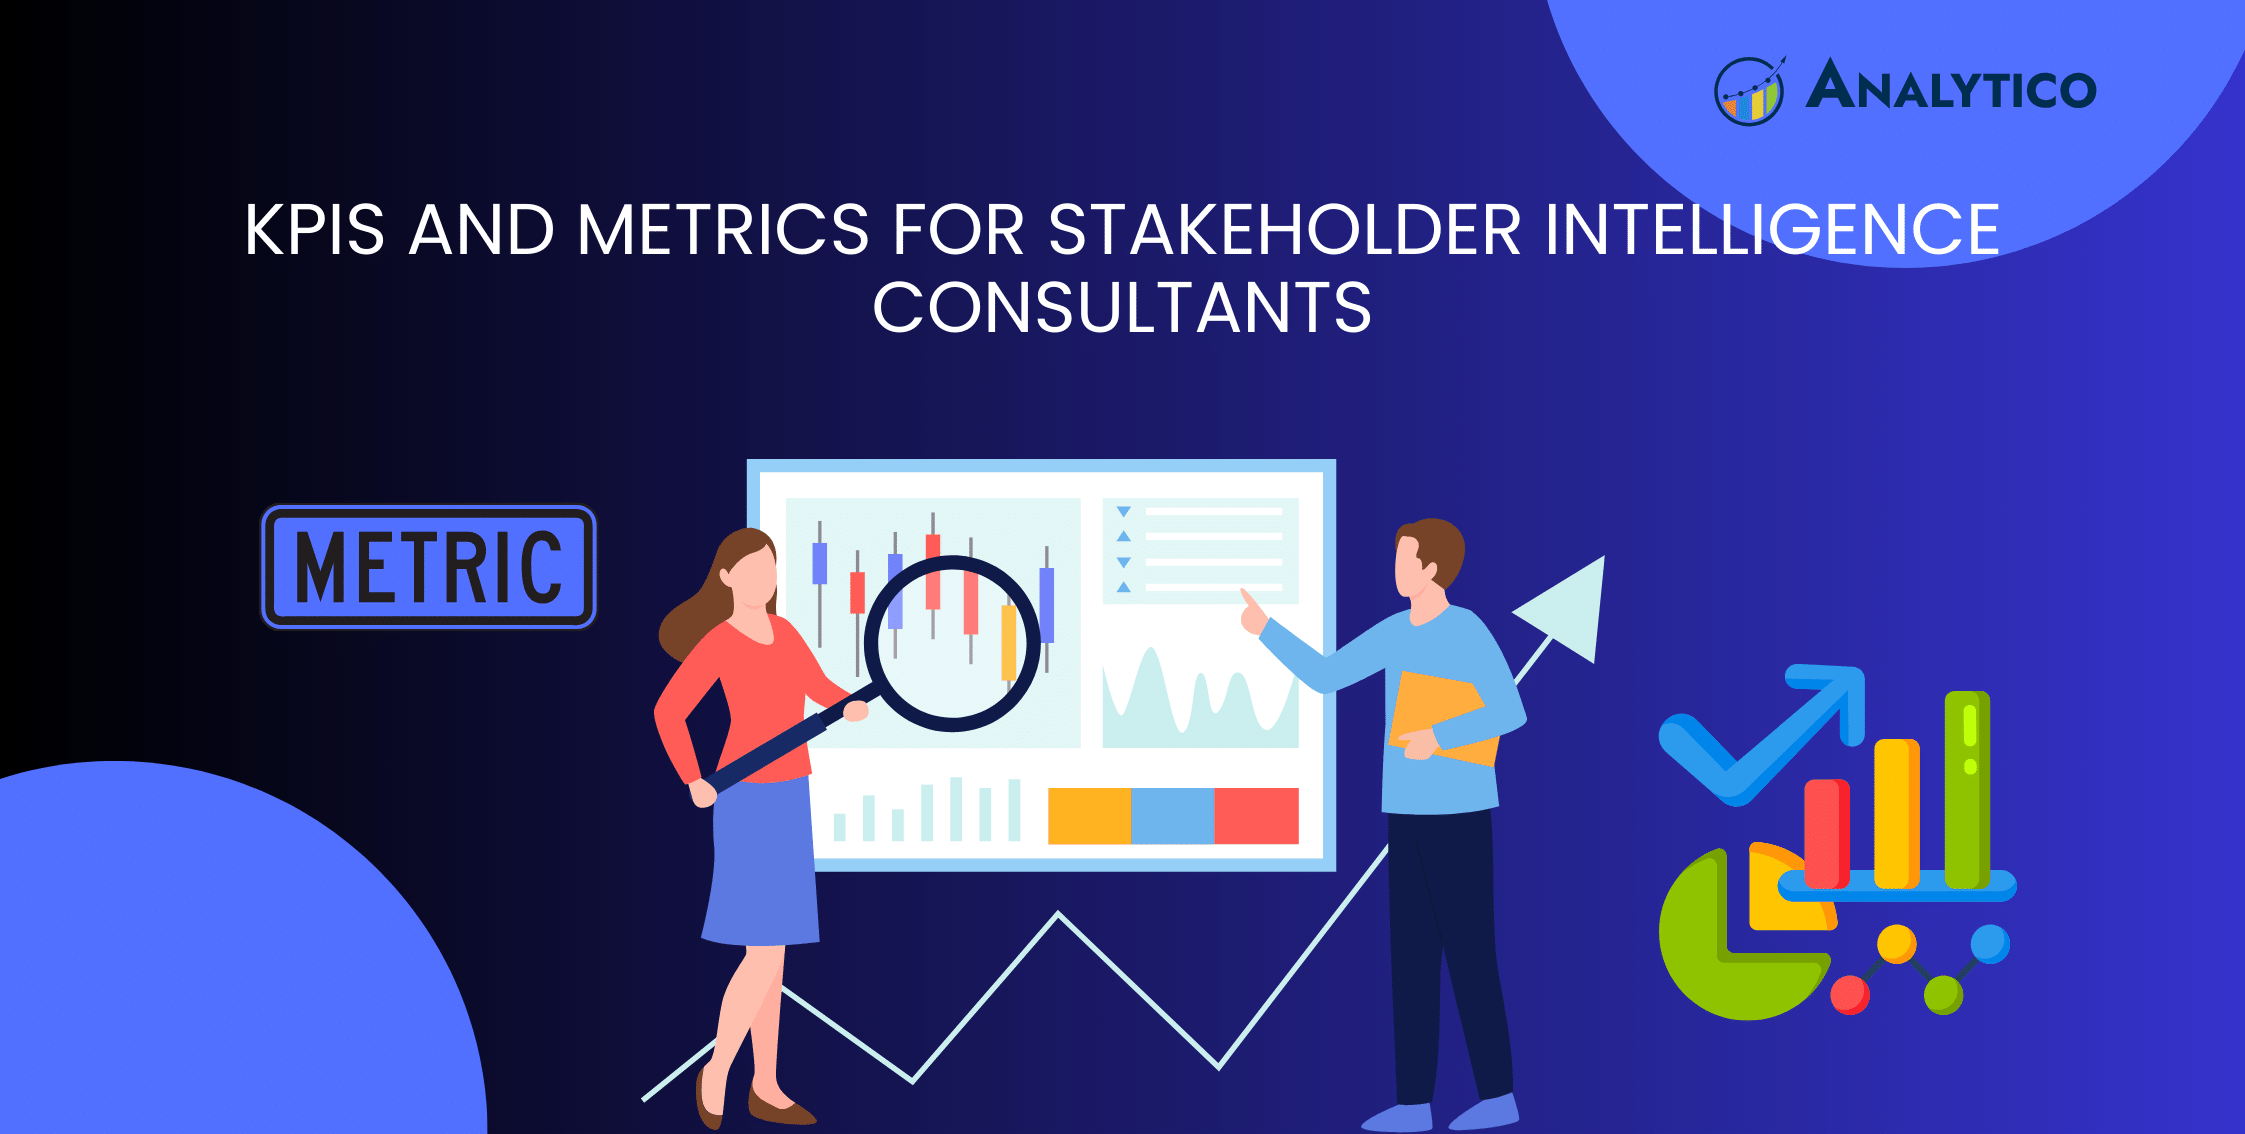 KPIs and Metrics for Stakeholder Intelligence Consultants